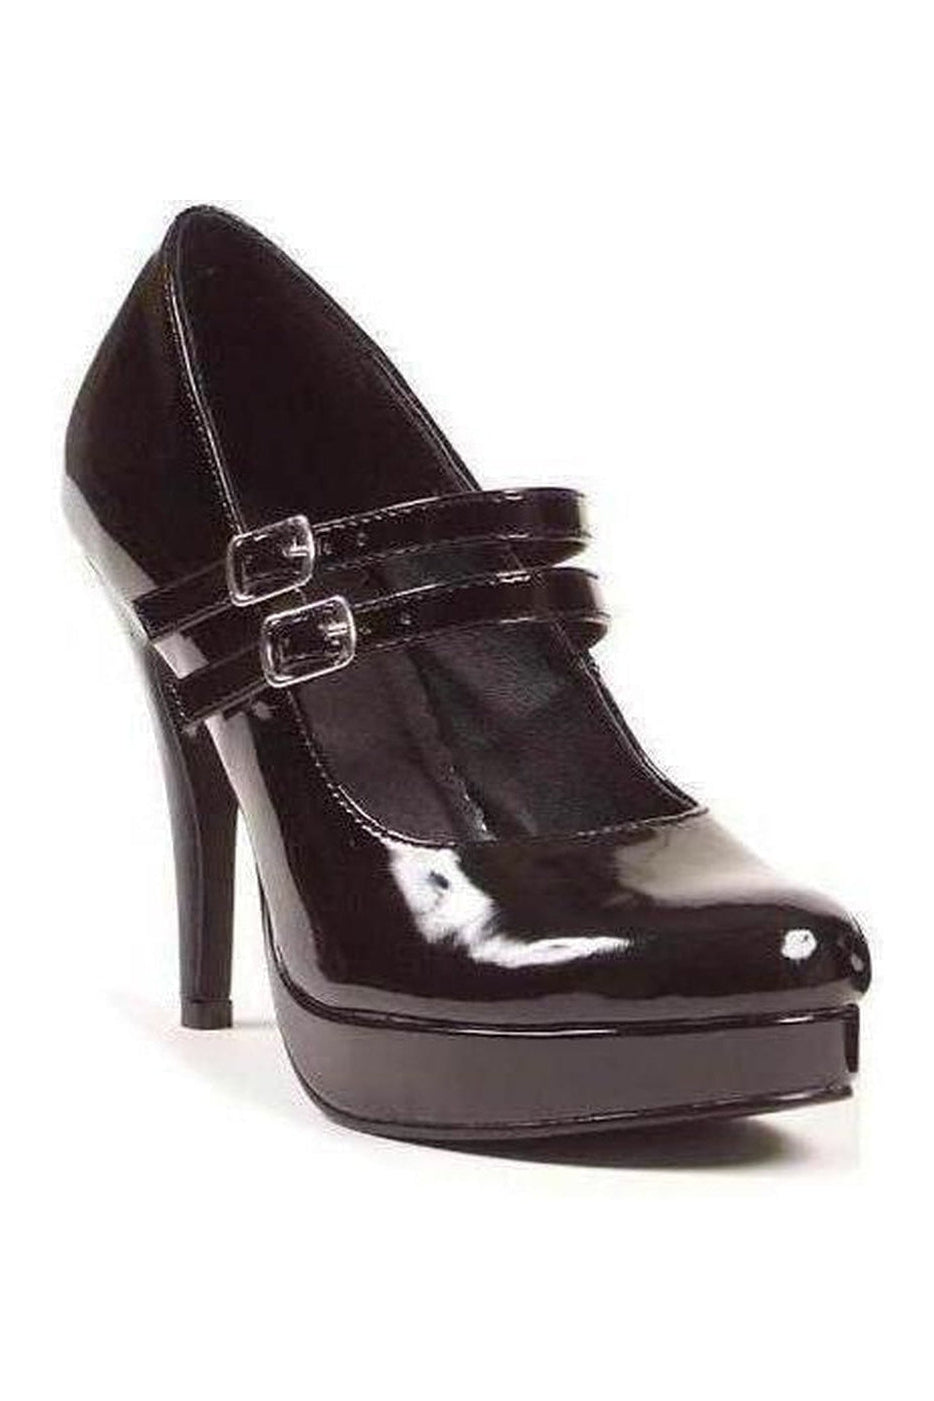 421-JANE Mary Jane | Black Patent-Ellie Shoes-Black-Mary Janes-SEXYSHOES.COM